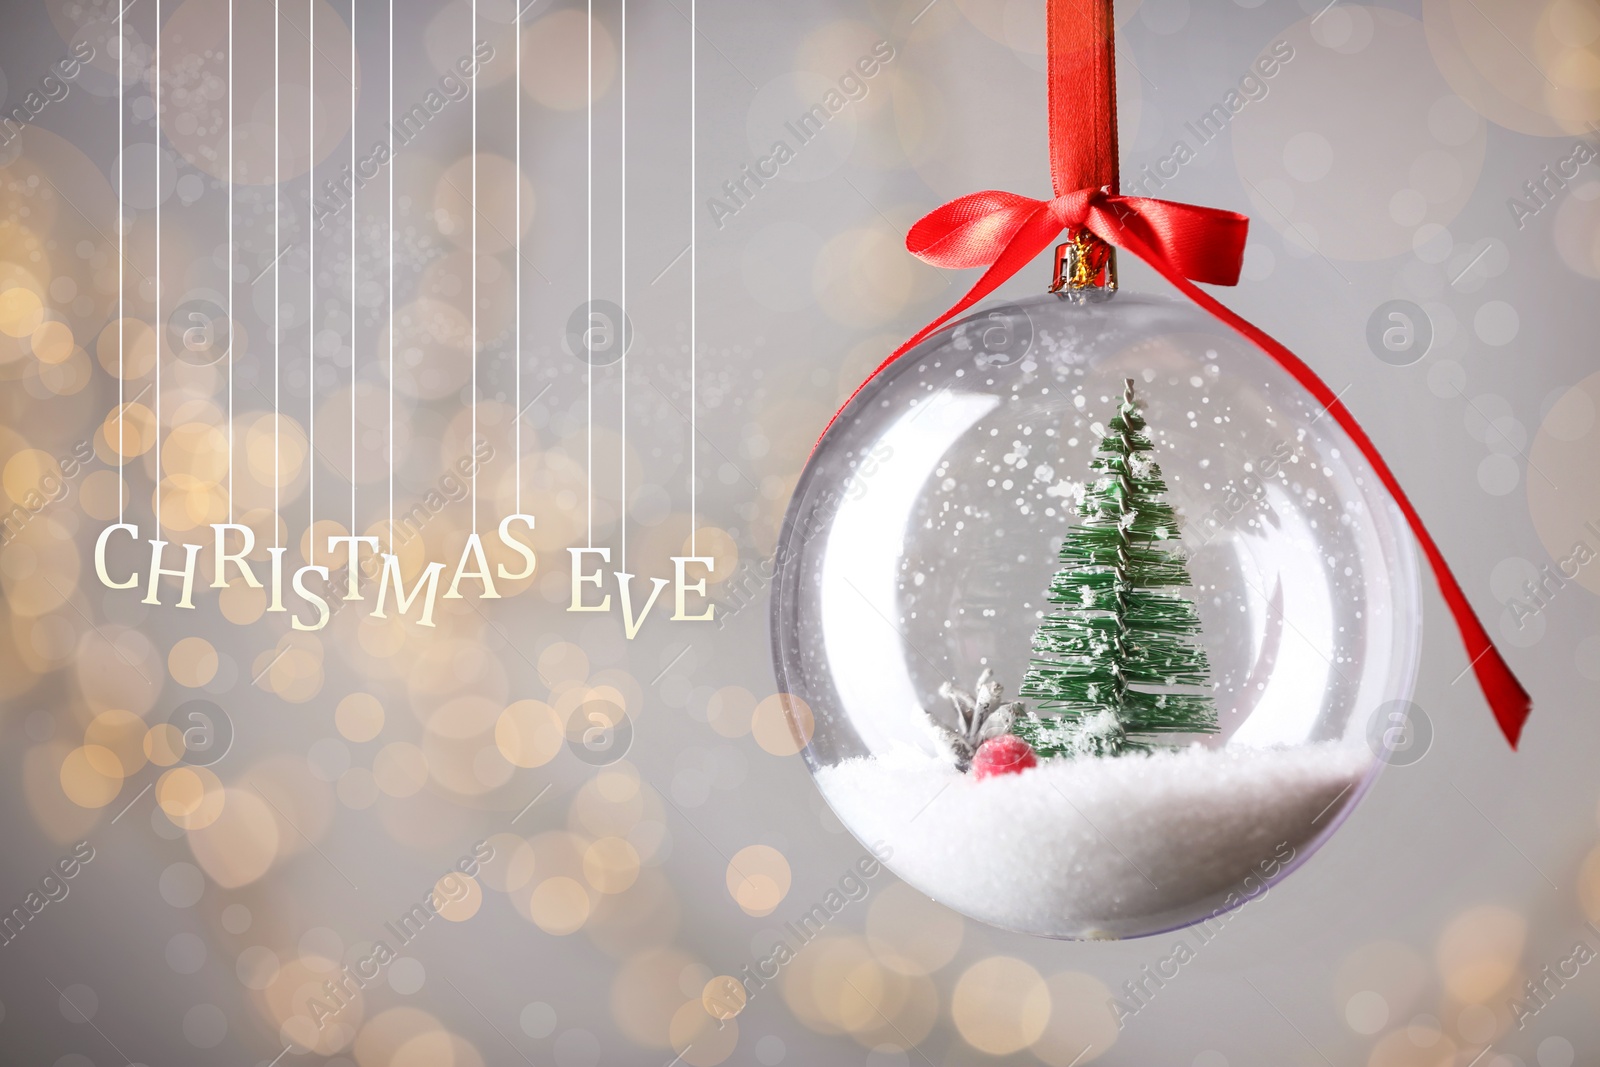 Image of Christmas Eve, postcard design. Decorative bauble against blurred festive lights 